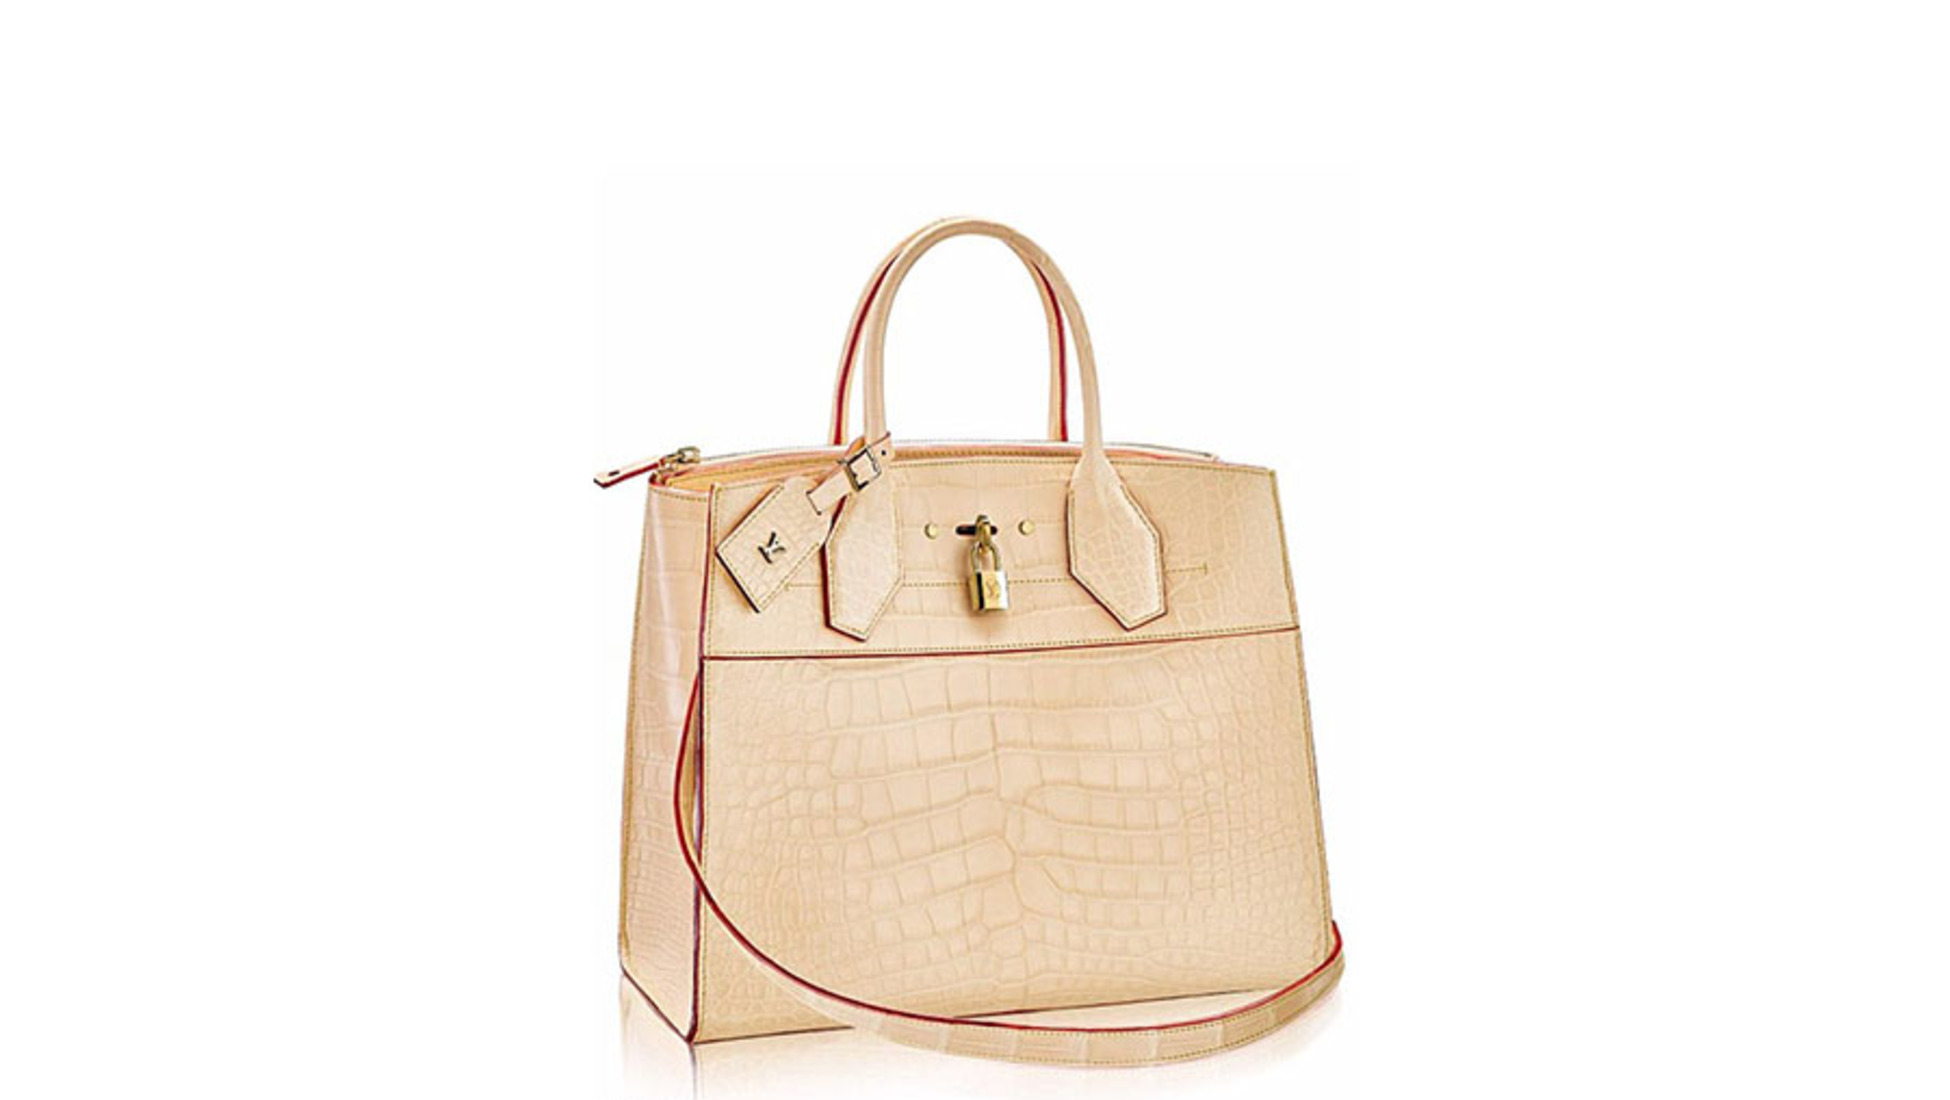 The Five Most Expensive Louis Vuitton Handbags Ever